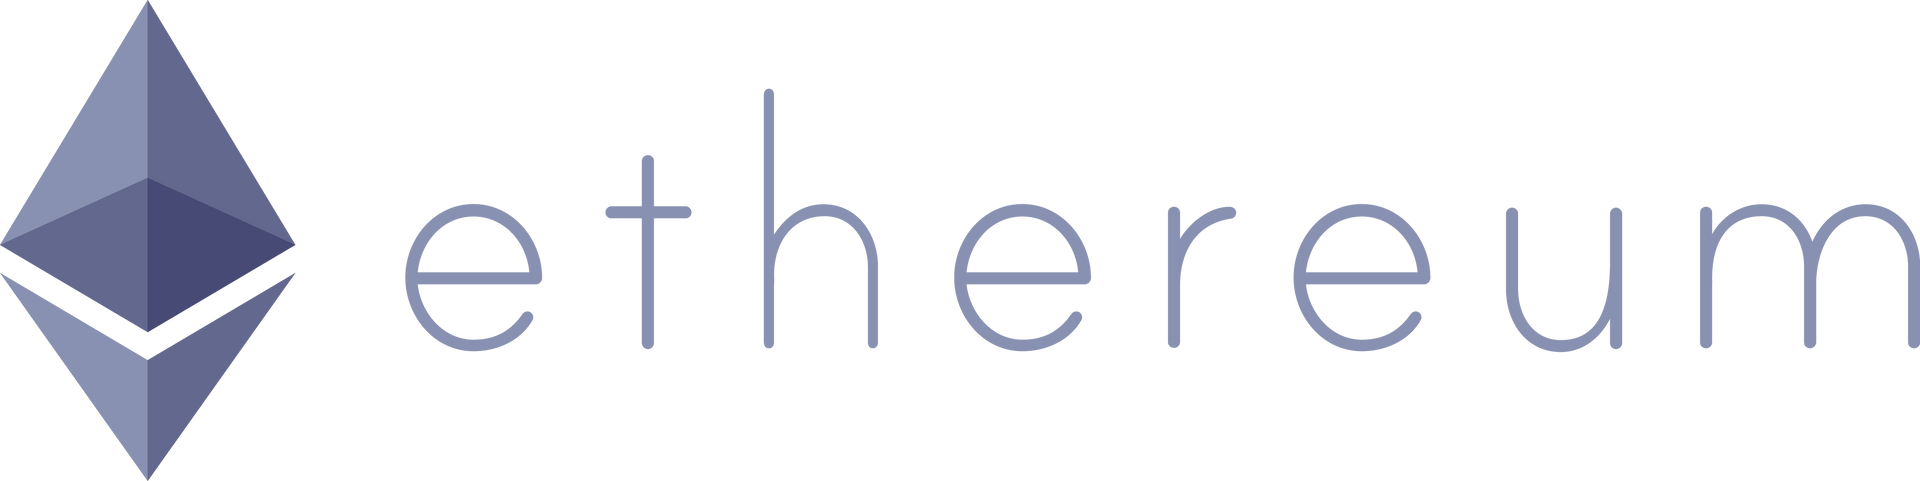 ETH logo landscape (purple)